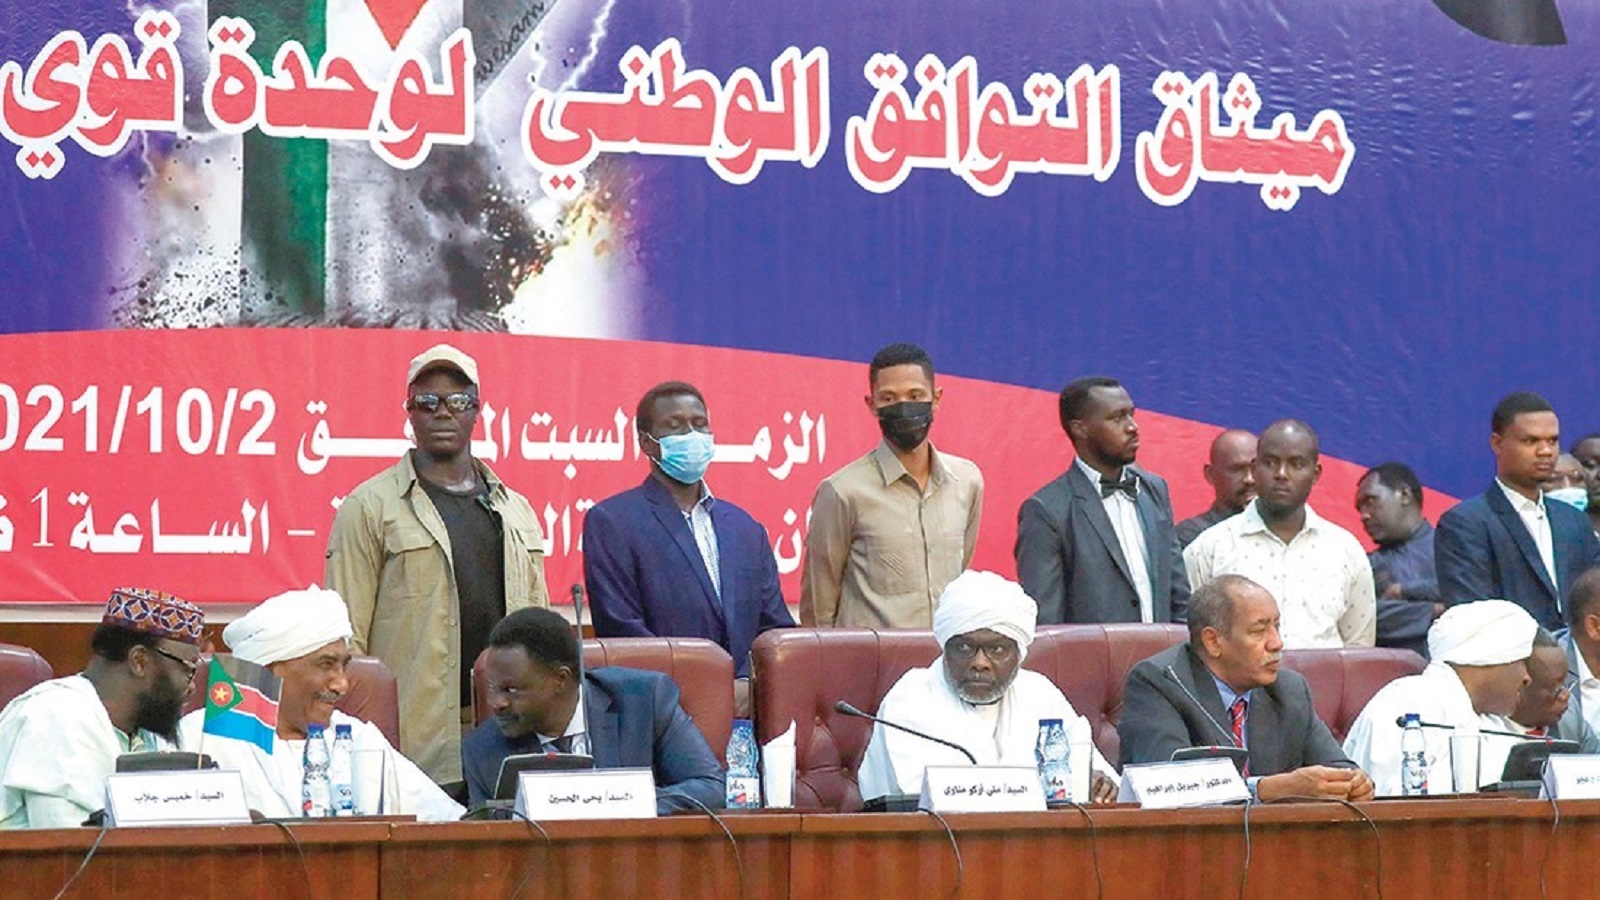 السودان:سيناريو انقلابي بتمثيل رديء